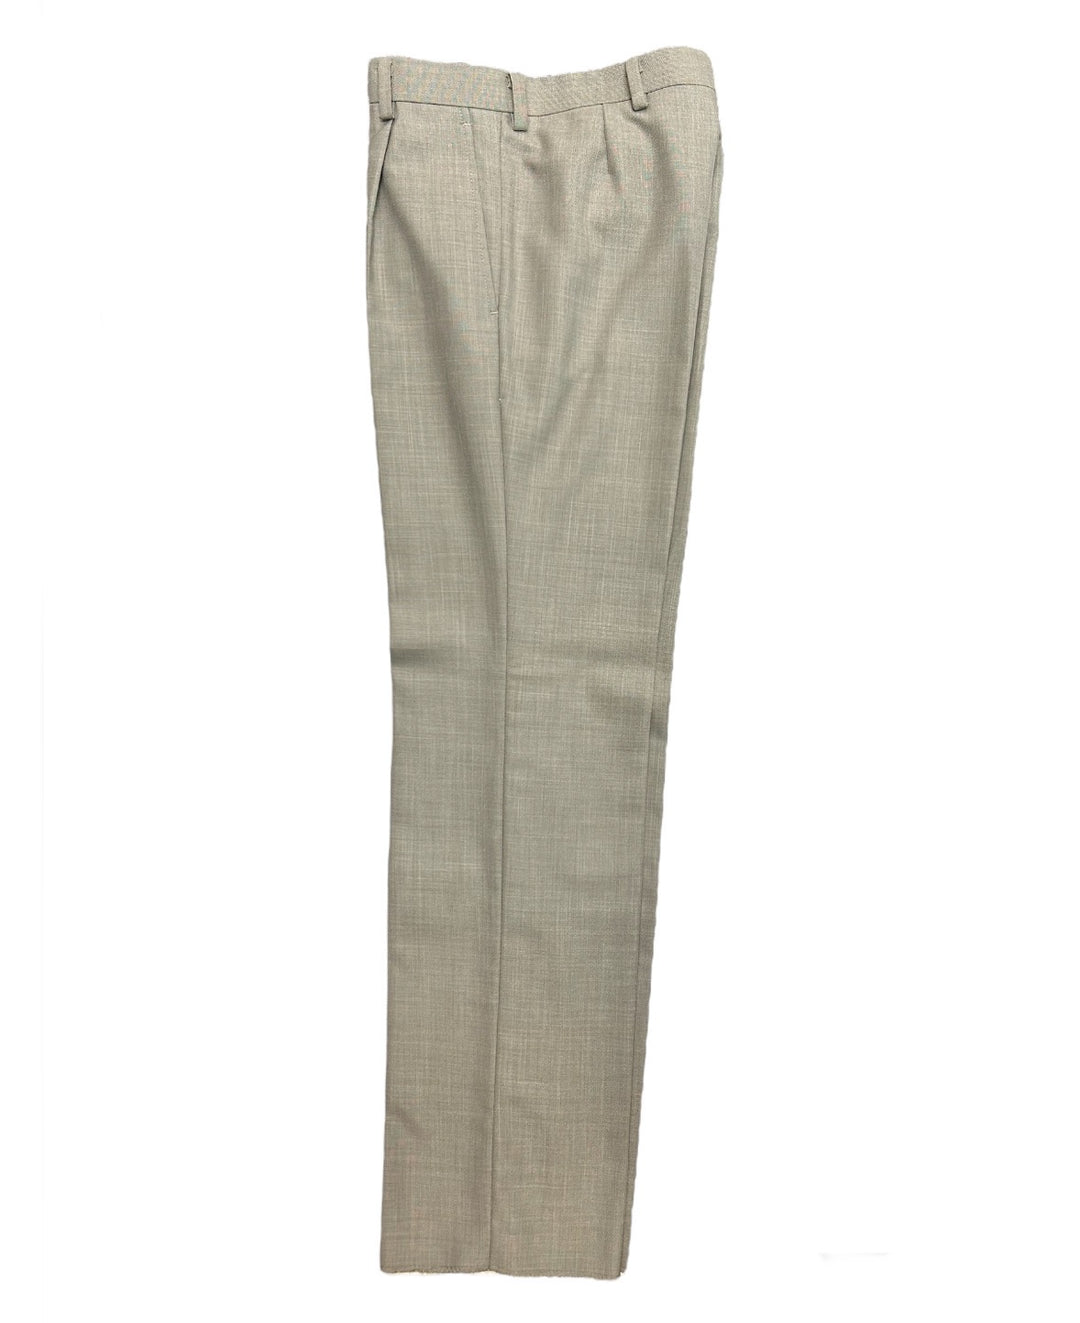 Michael Kors Boys Suit 3 Button Light Grey Clearance Suit-Grey/Tan